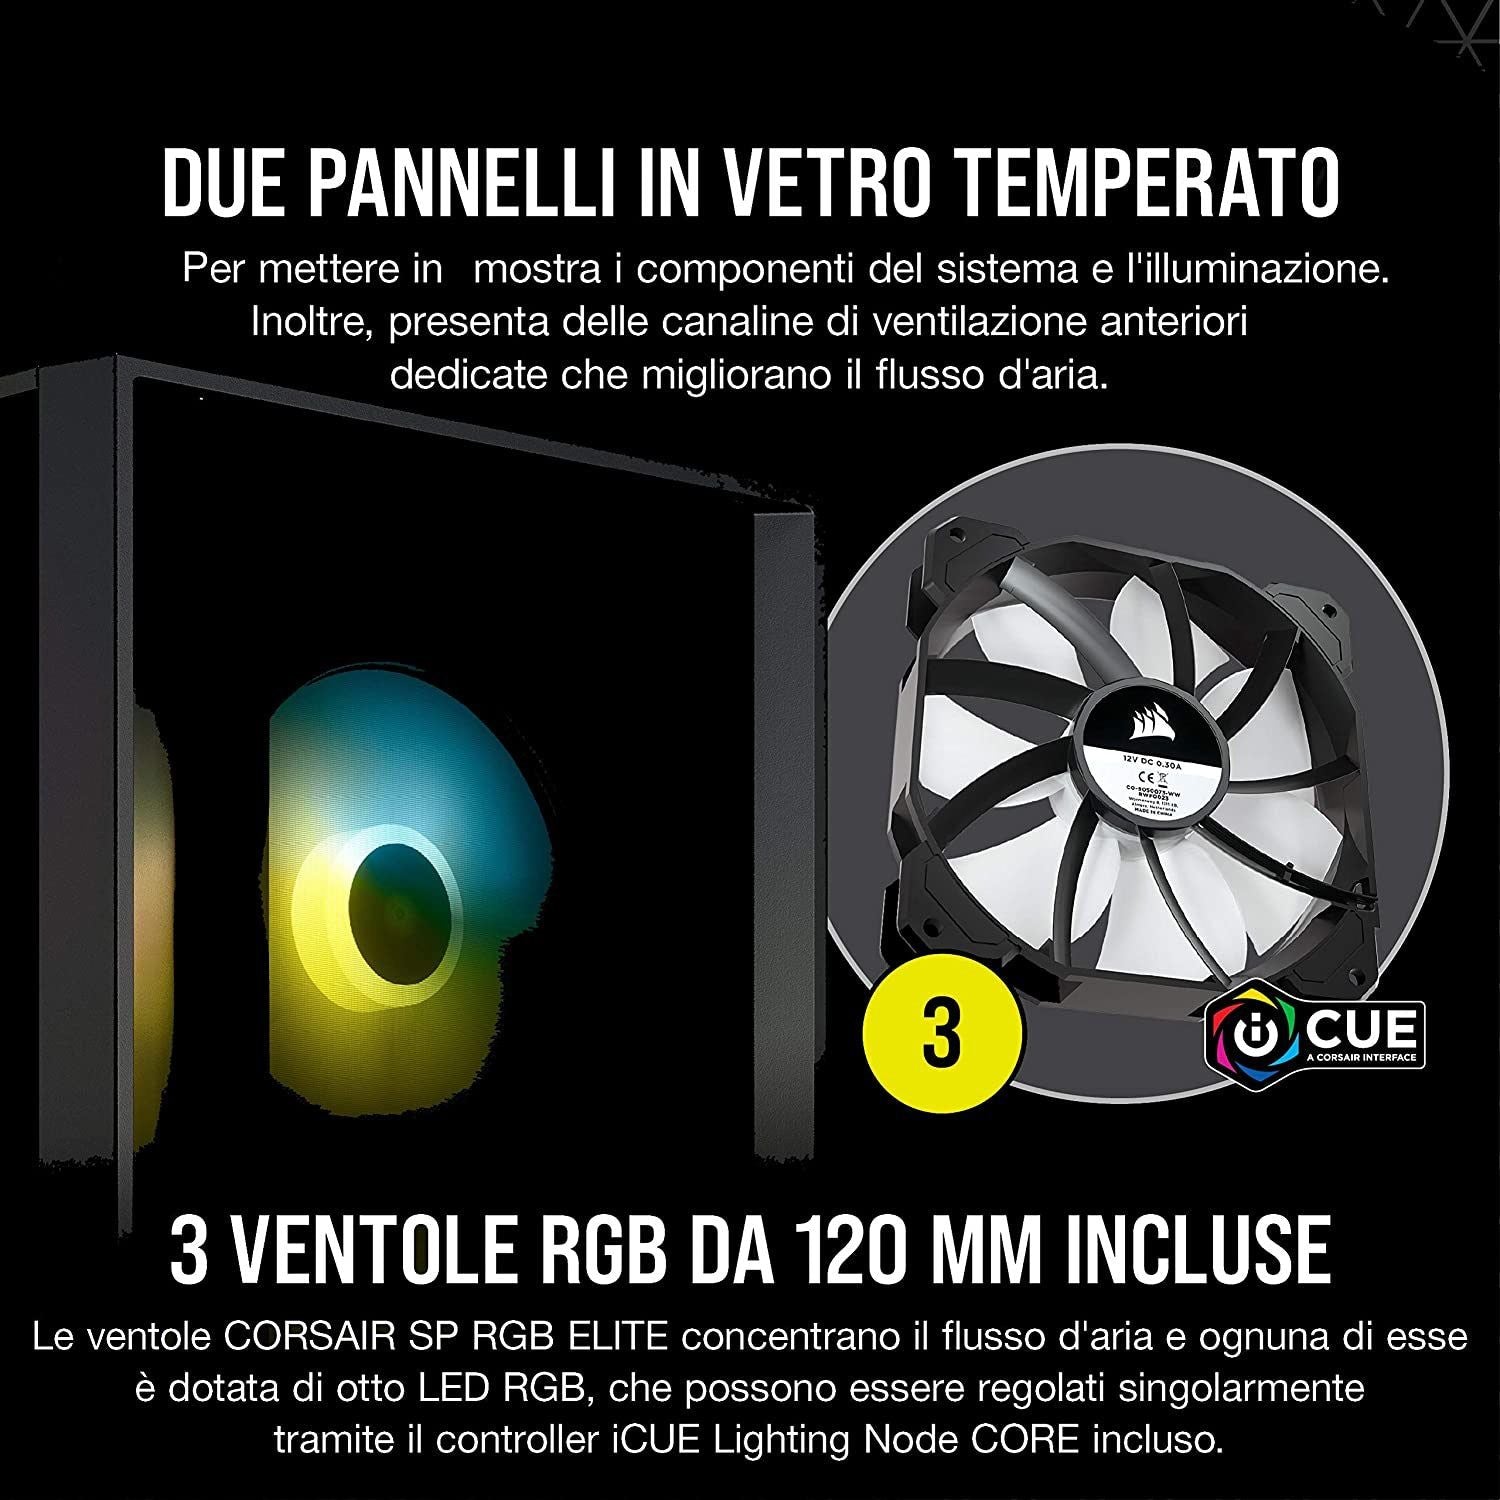 CORSAIR iCUE 4000X RGB Black - OVERCLOCK Computer